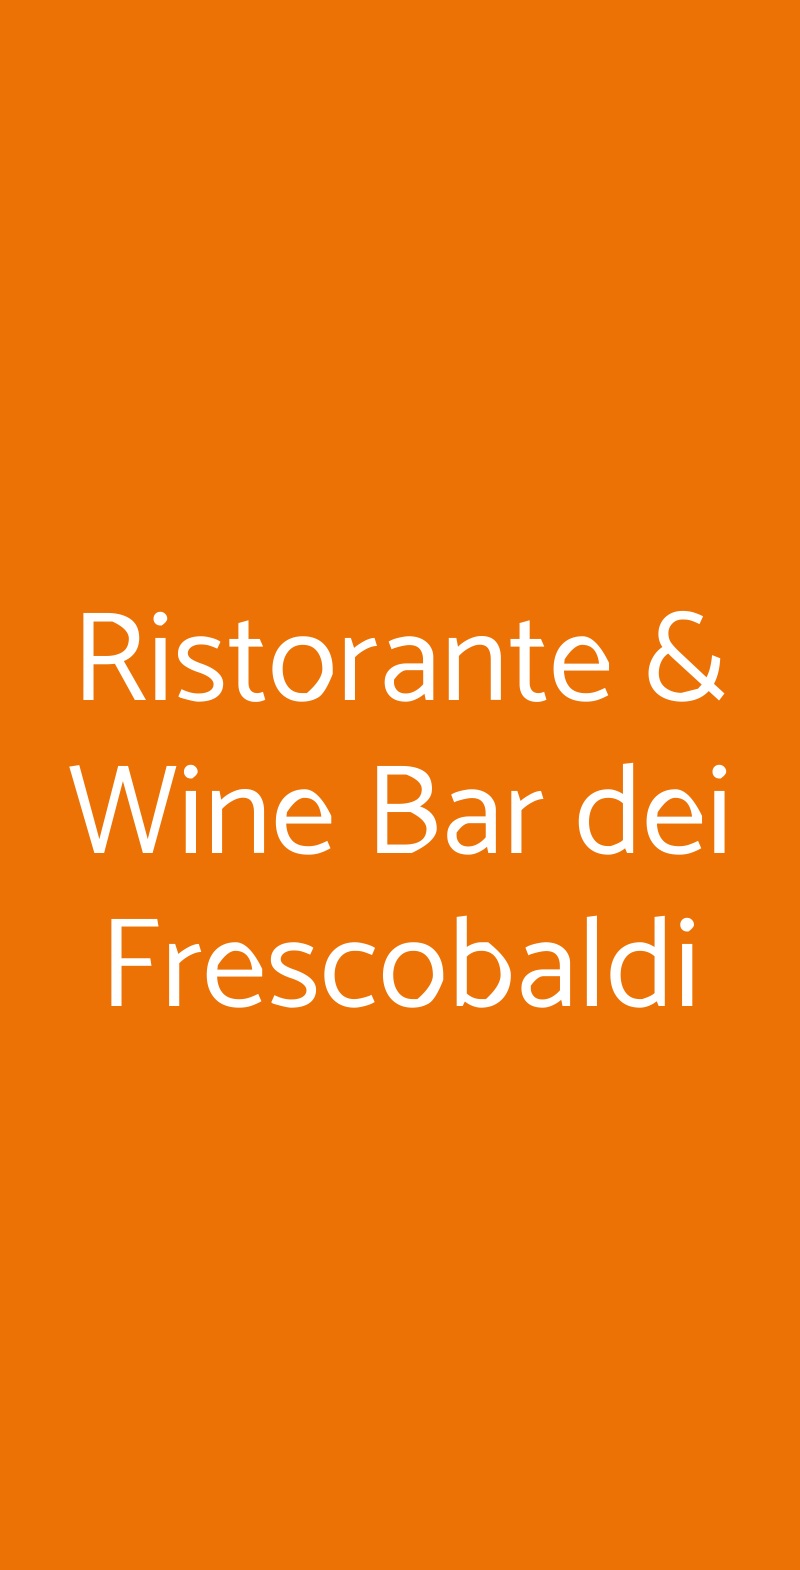 Ristorante & Wine Bar dei Frescobaldi Firenze menù 1 pagina